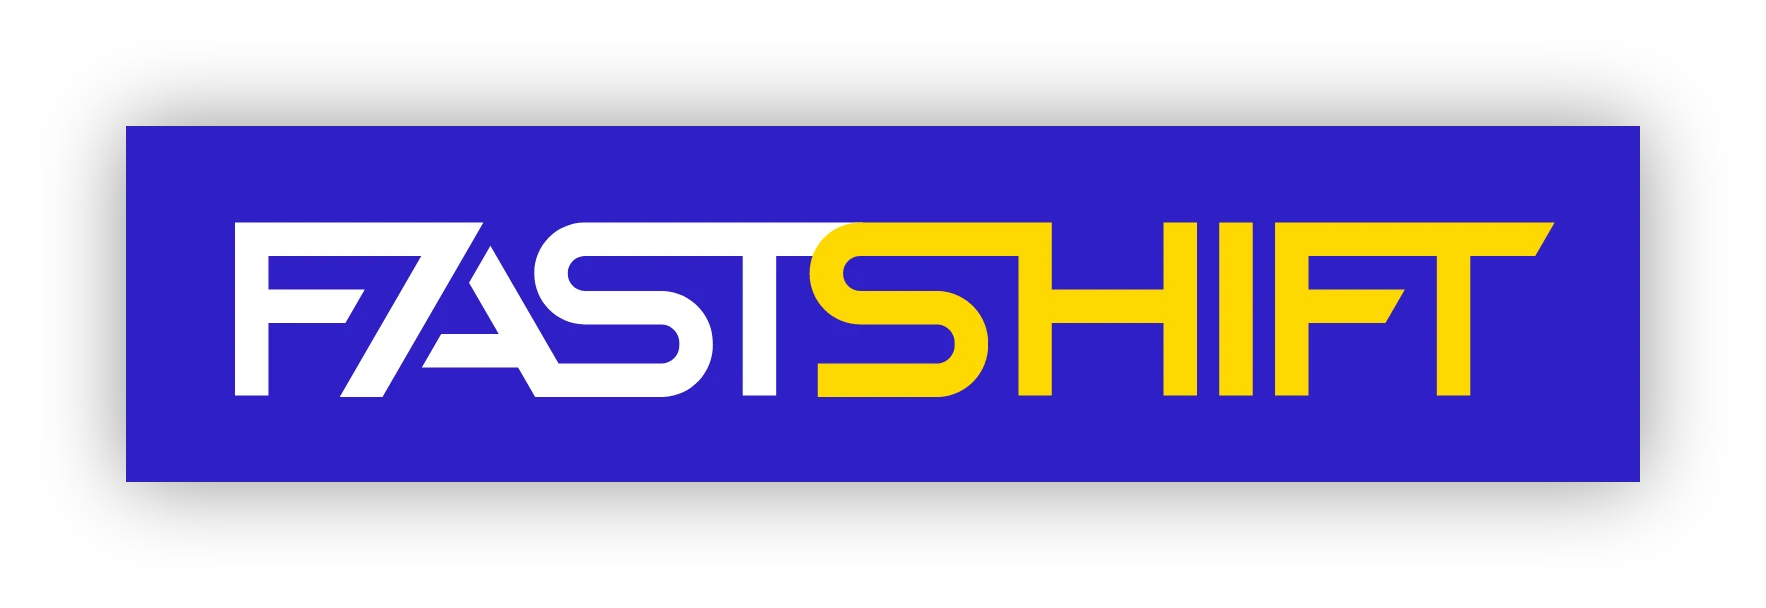 Fastshift logo